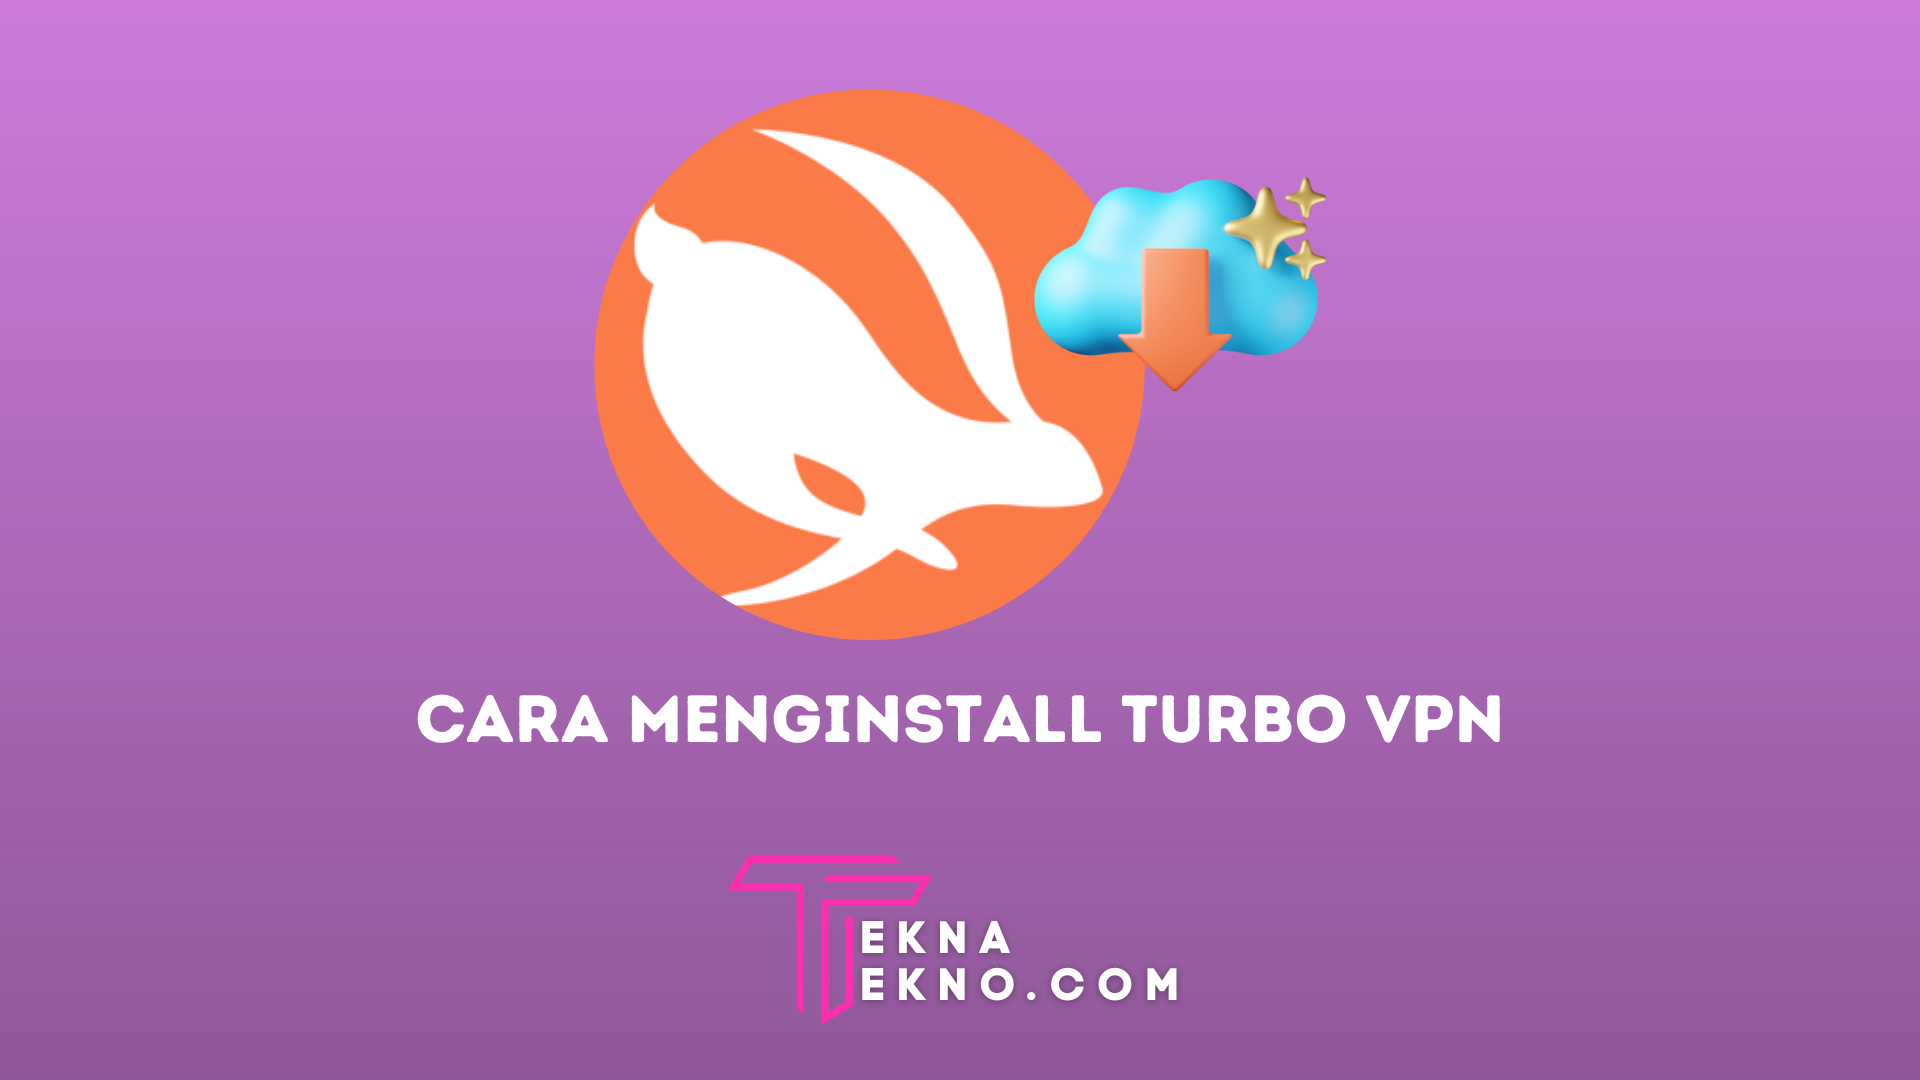 2 Cara Menginstall Turbo VPN di PC Windows dan Mac